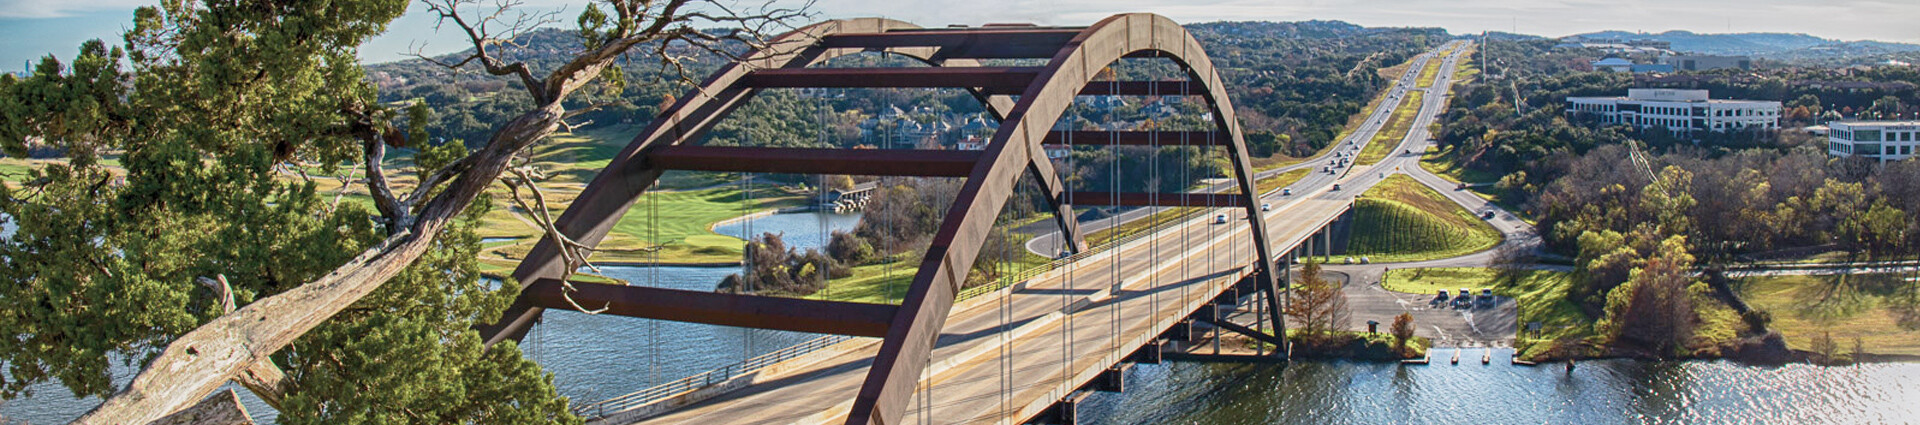 Pennybacker bridge Austin Texas